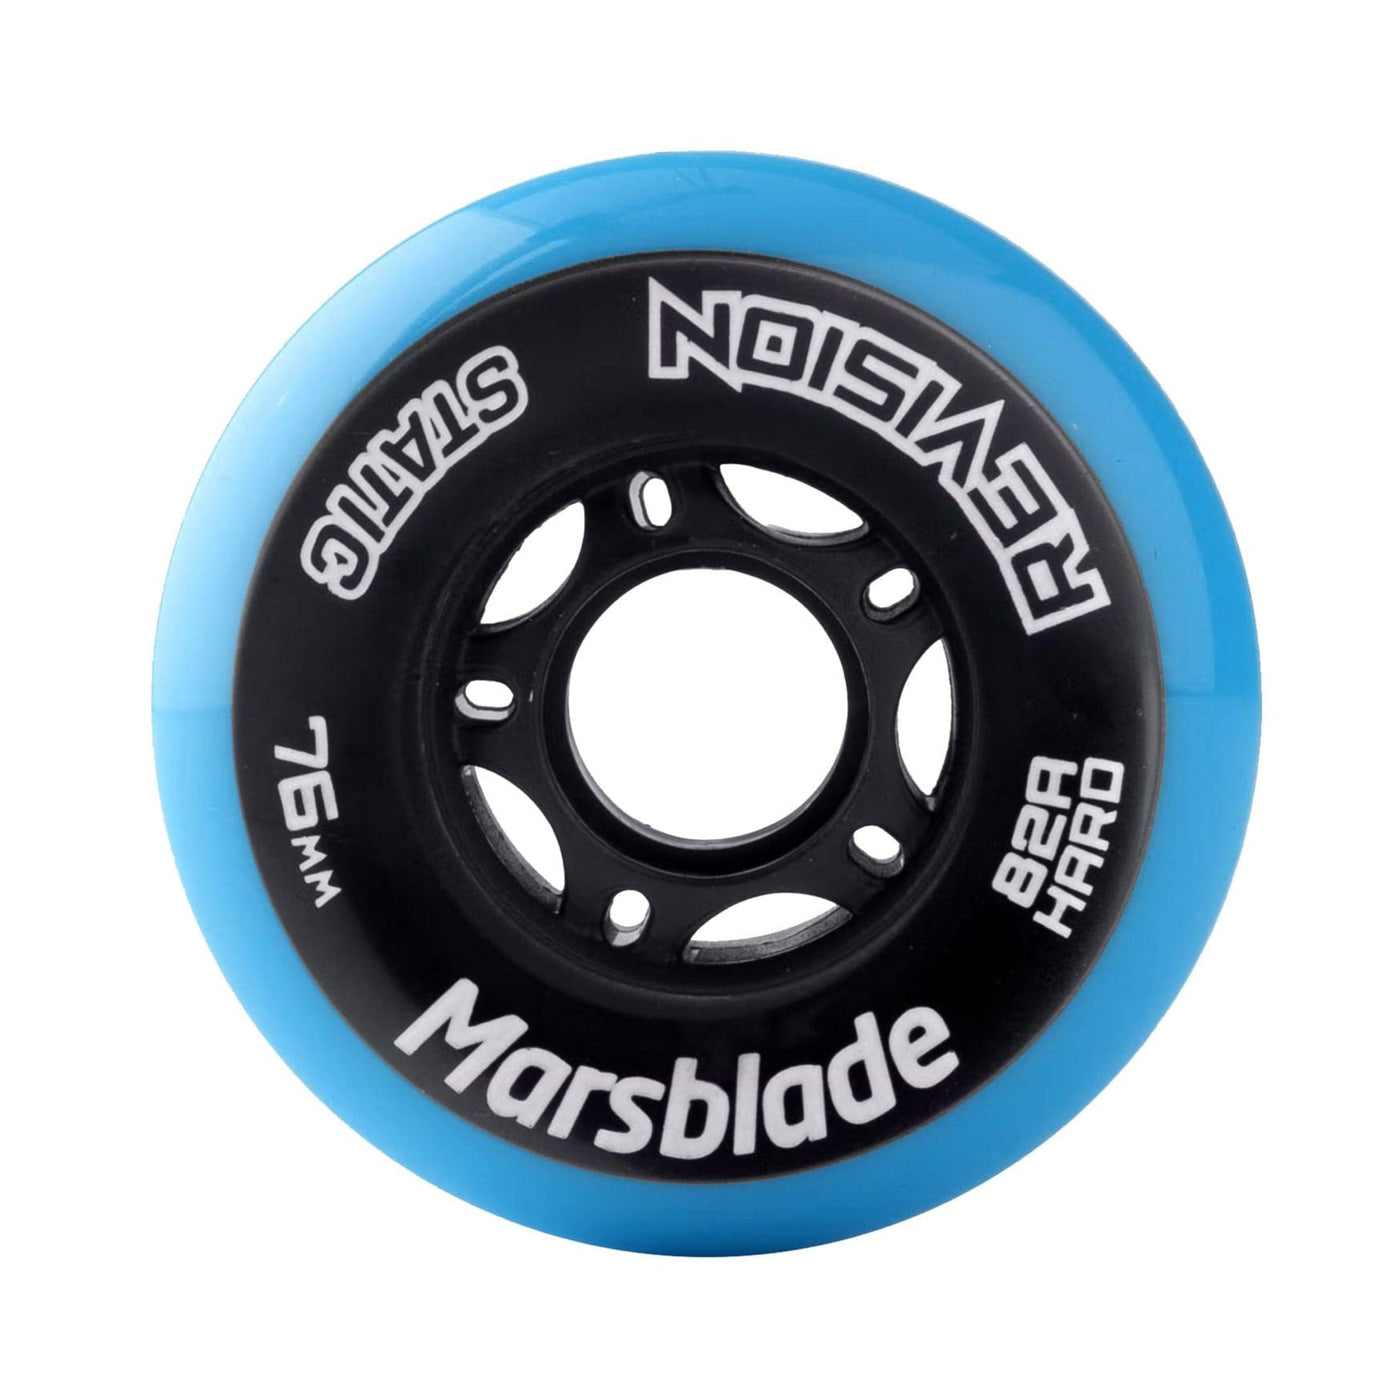 Marsblade Static Single Pour Street Roller Hockey Wheels